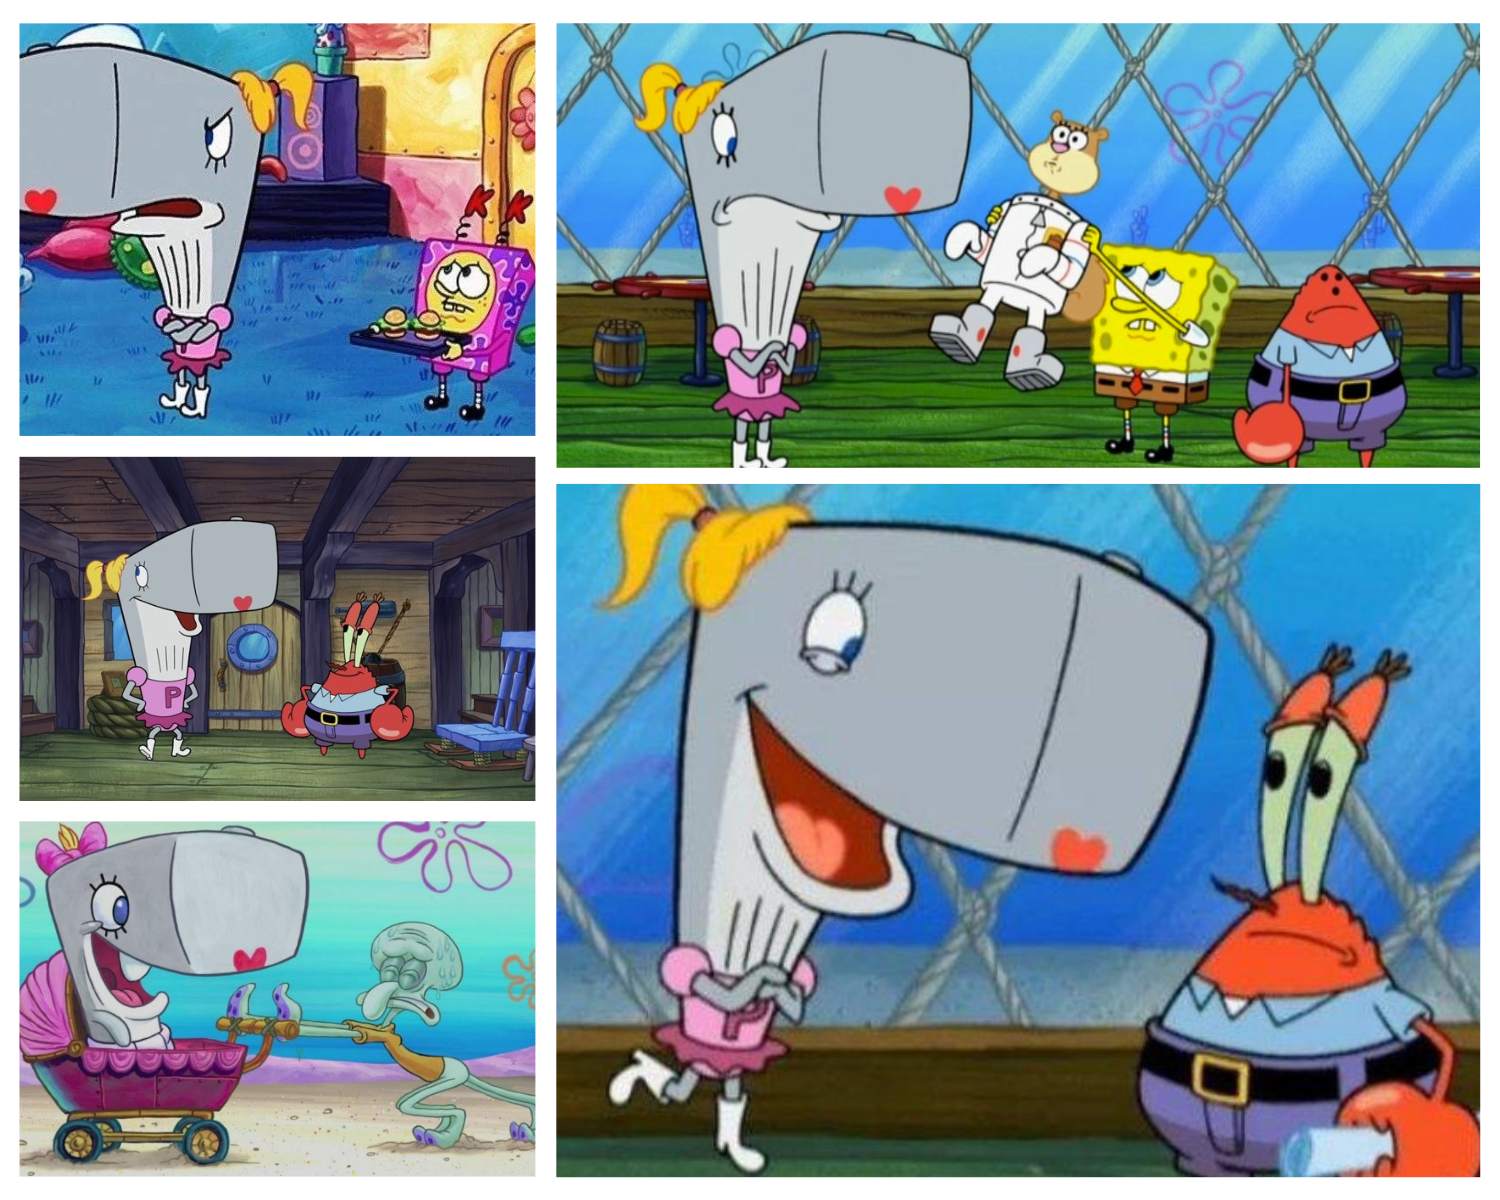 Pearl Krabs The Teenage Whale from SpongeBob SquarePants